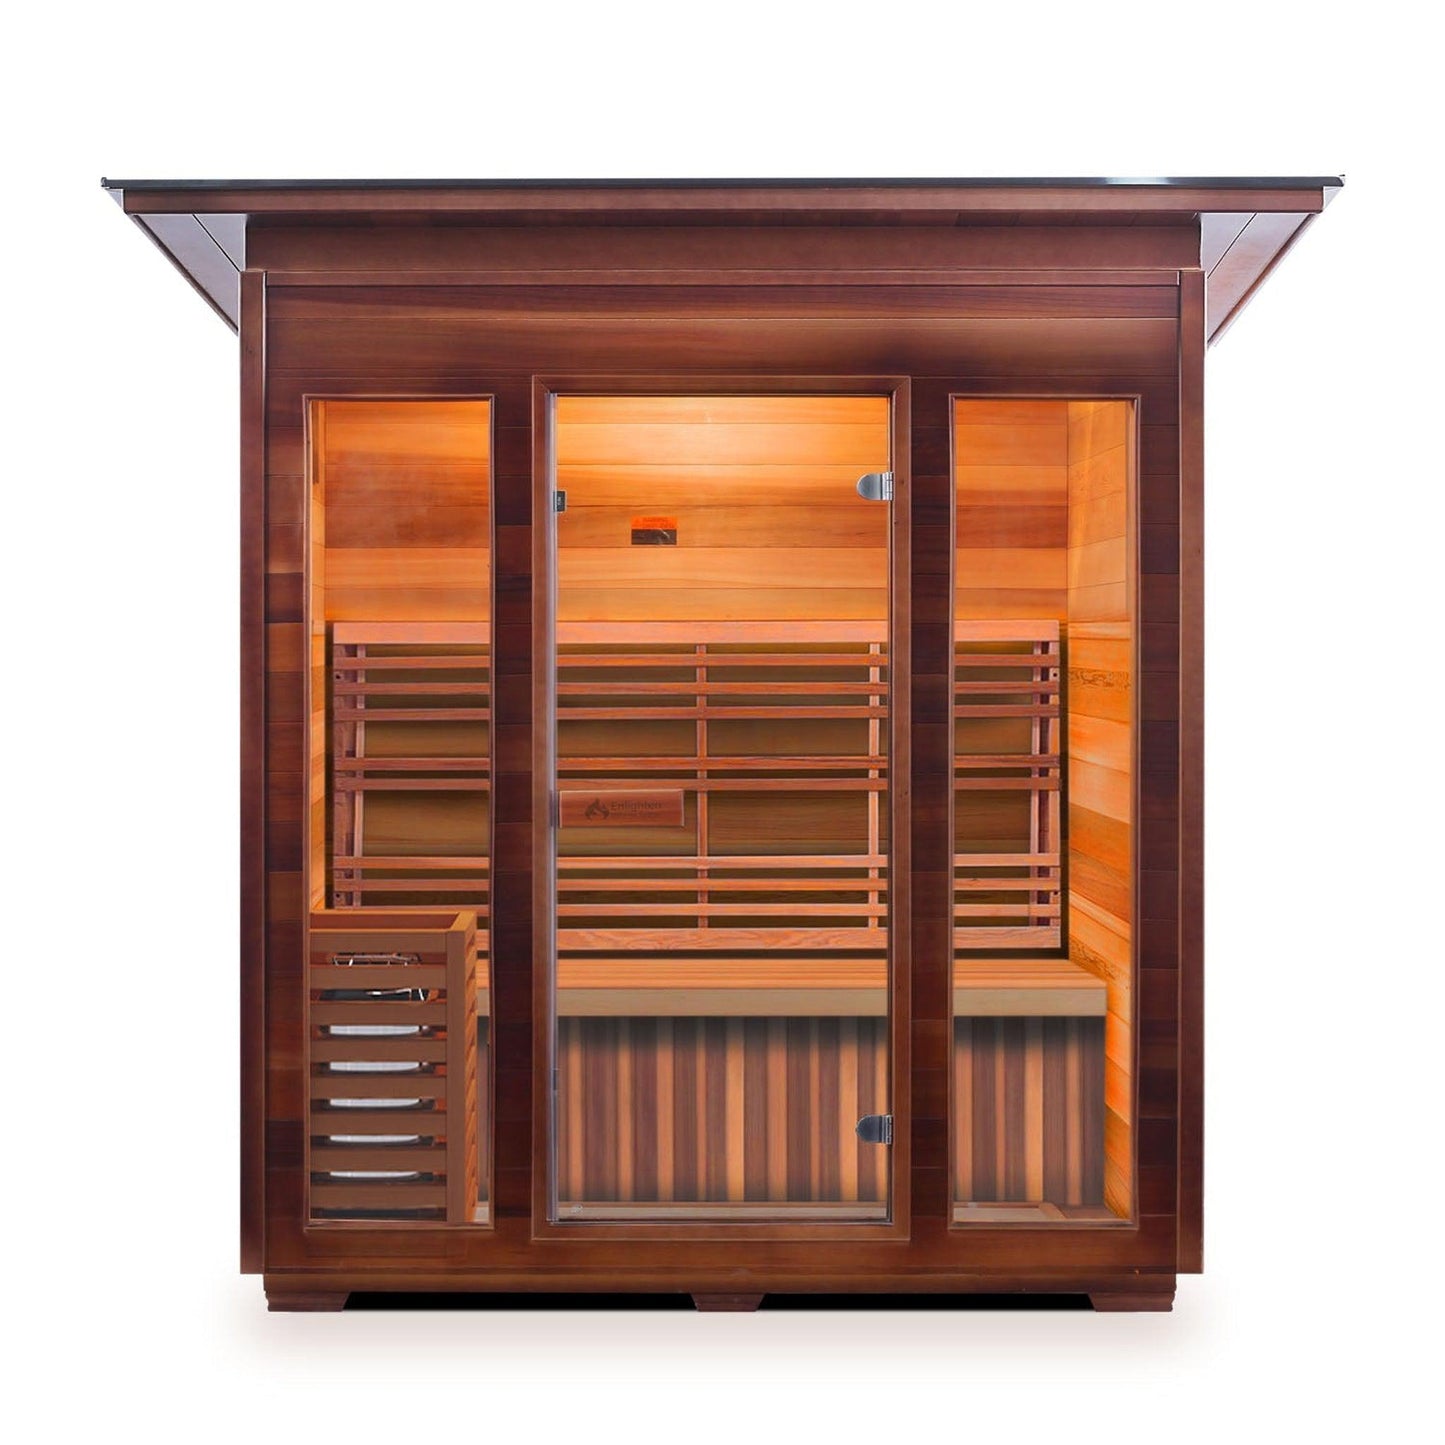 Enlighten SaunaTerra SunRise 4-Person Slope Roof Dry Traditional Outdoor Sauna